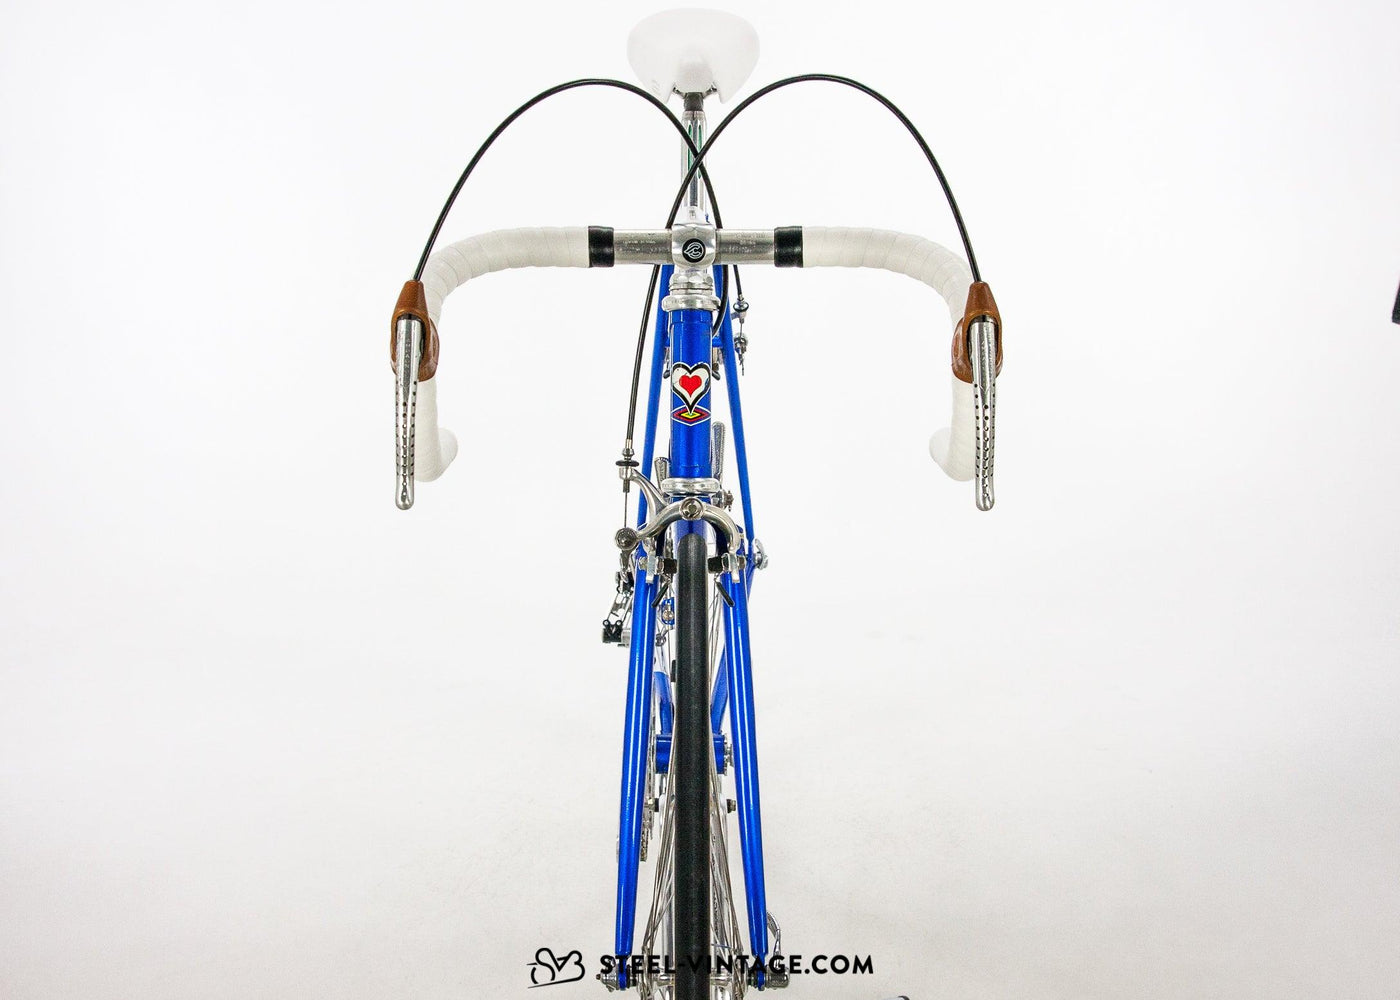 De Rosa Primato Classic Road Bike - Steel Vintage Bikes